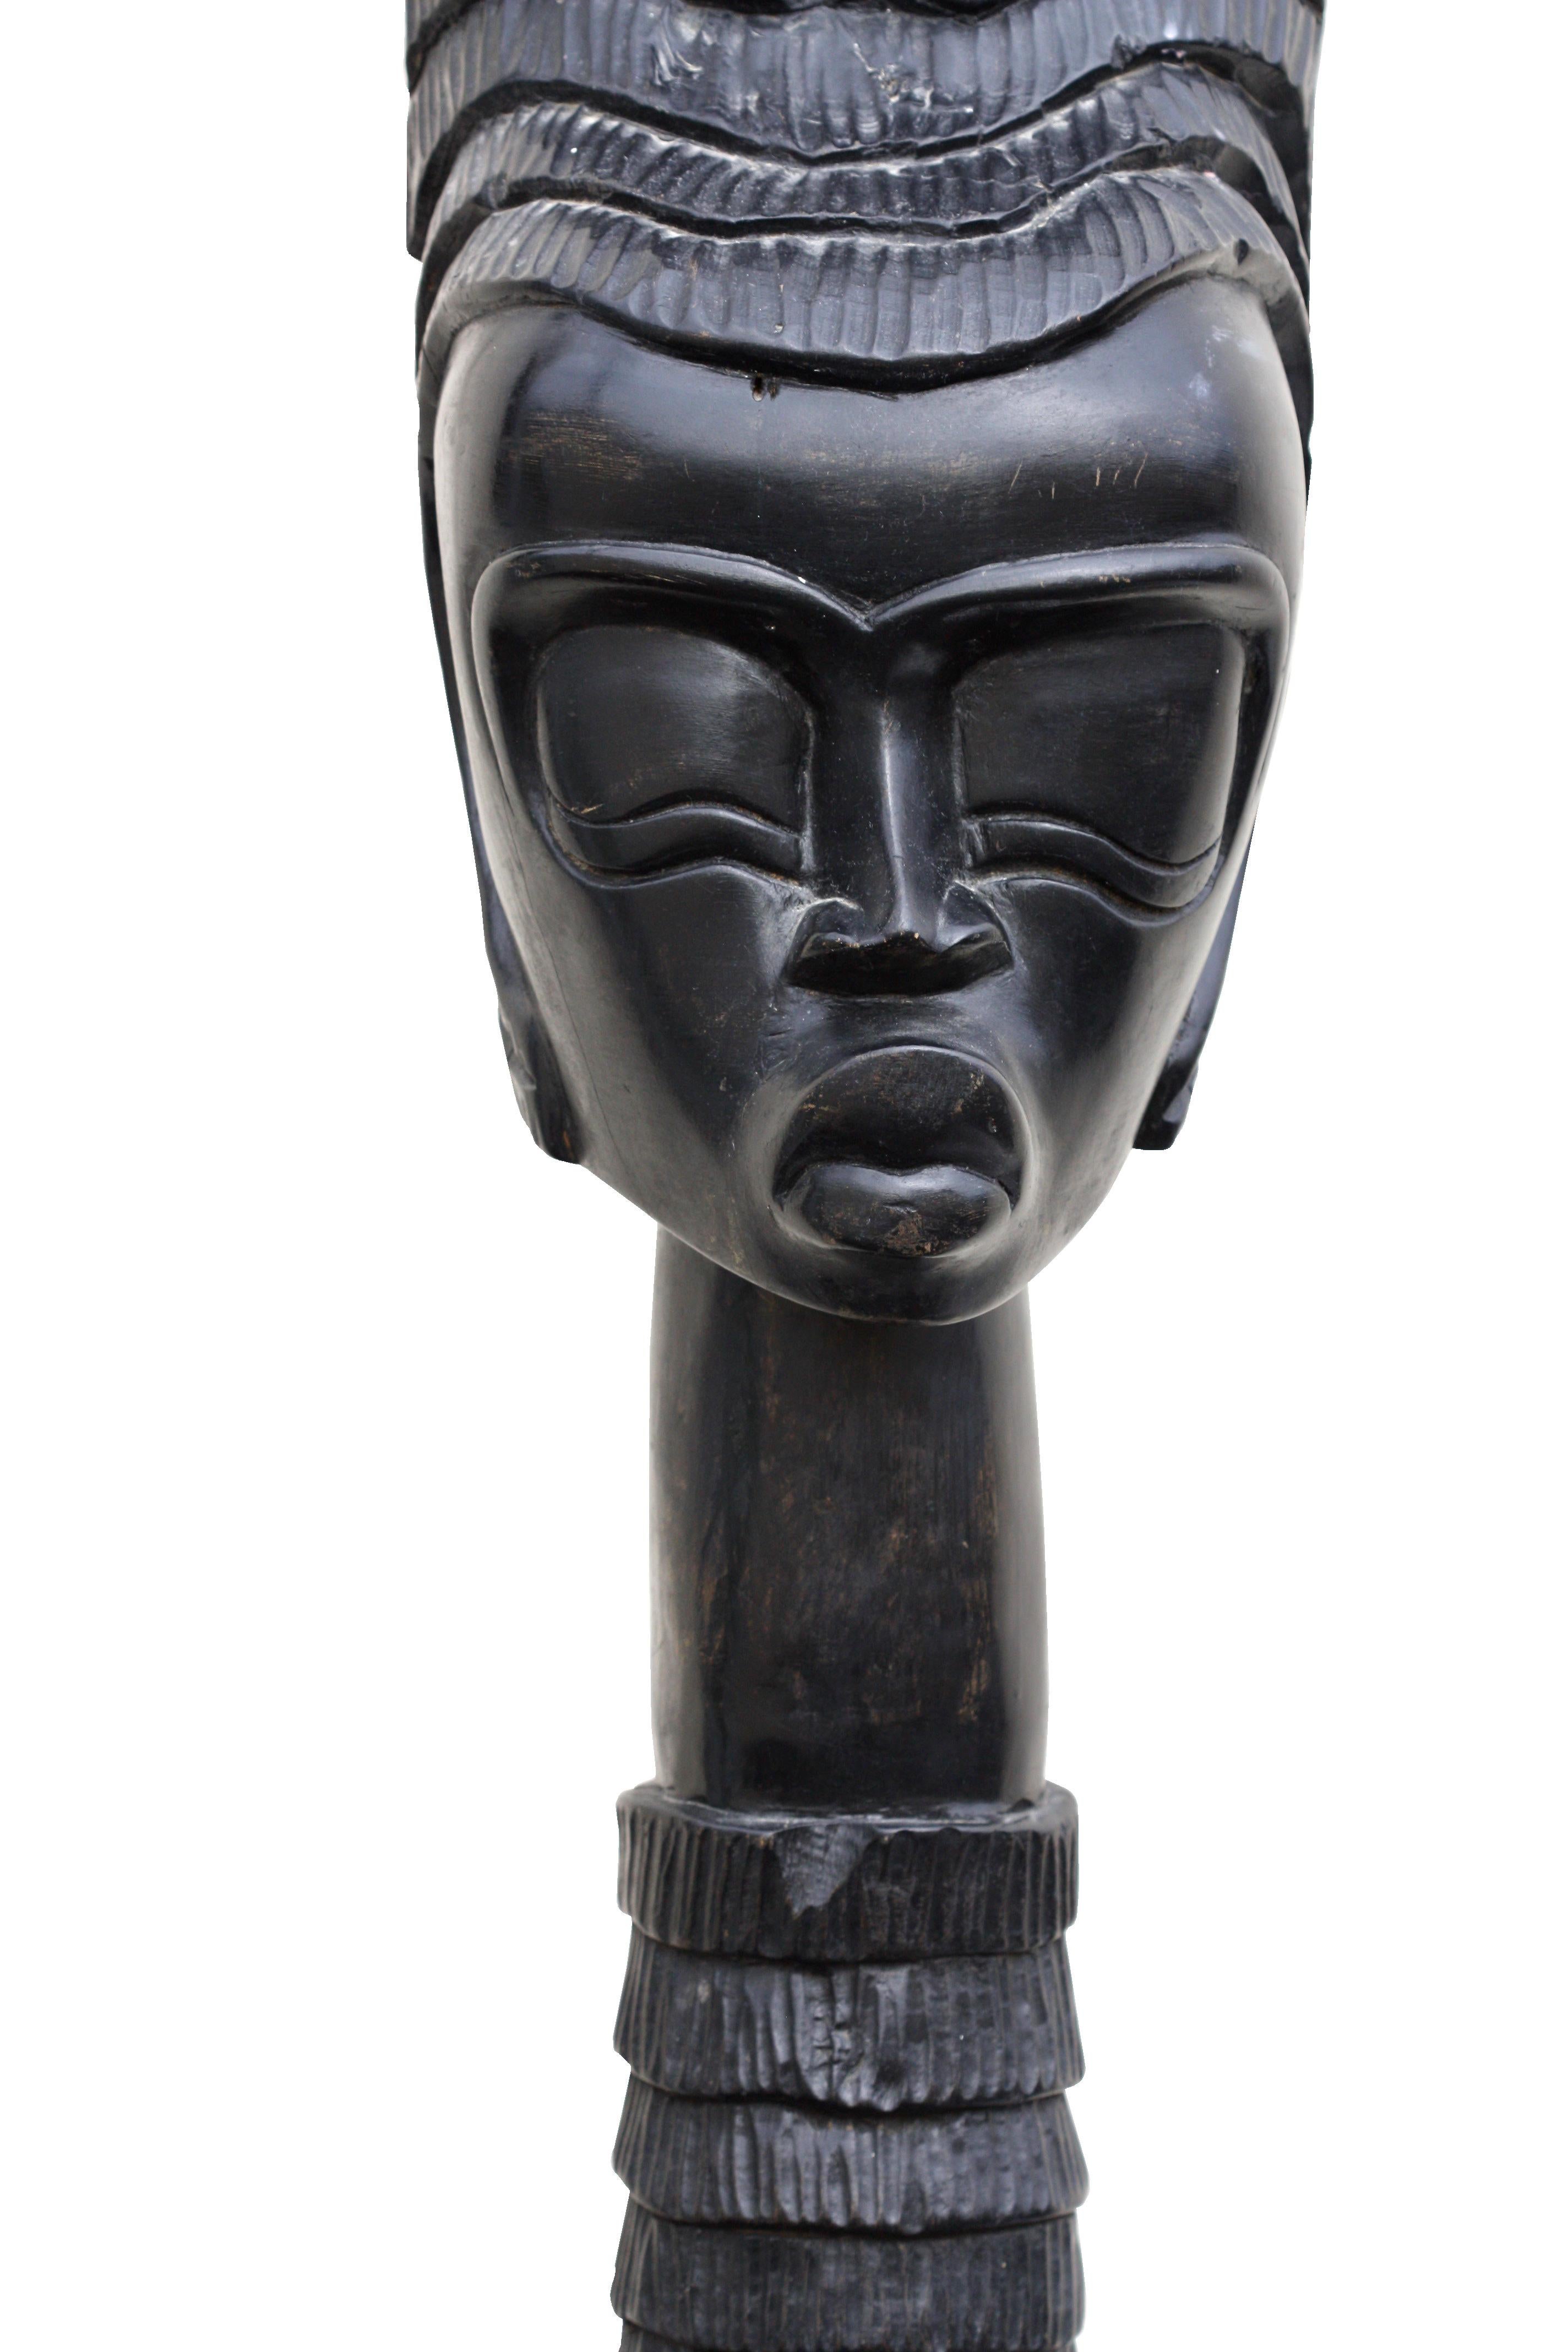 Ashanti female head, Ghana style
Measures: Height 43 in (109.2 cm.), width 8.25 in. (20.95 cm.), base width 7.75 in. (19.68 cm.), base depth 9.18 in. (23.33 cm.).